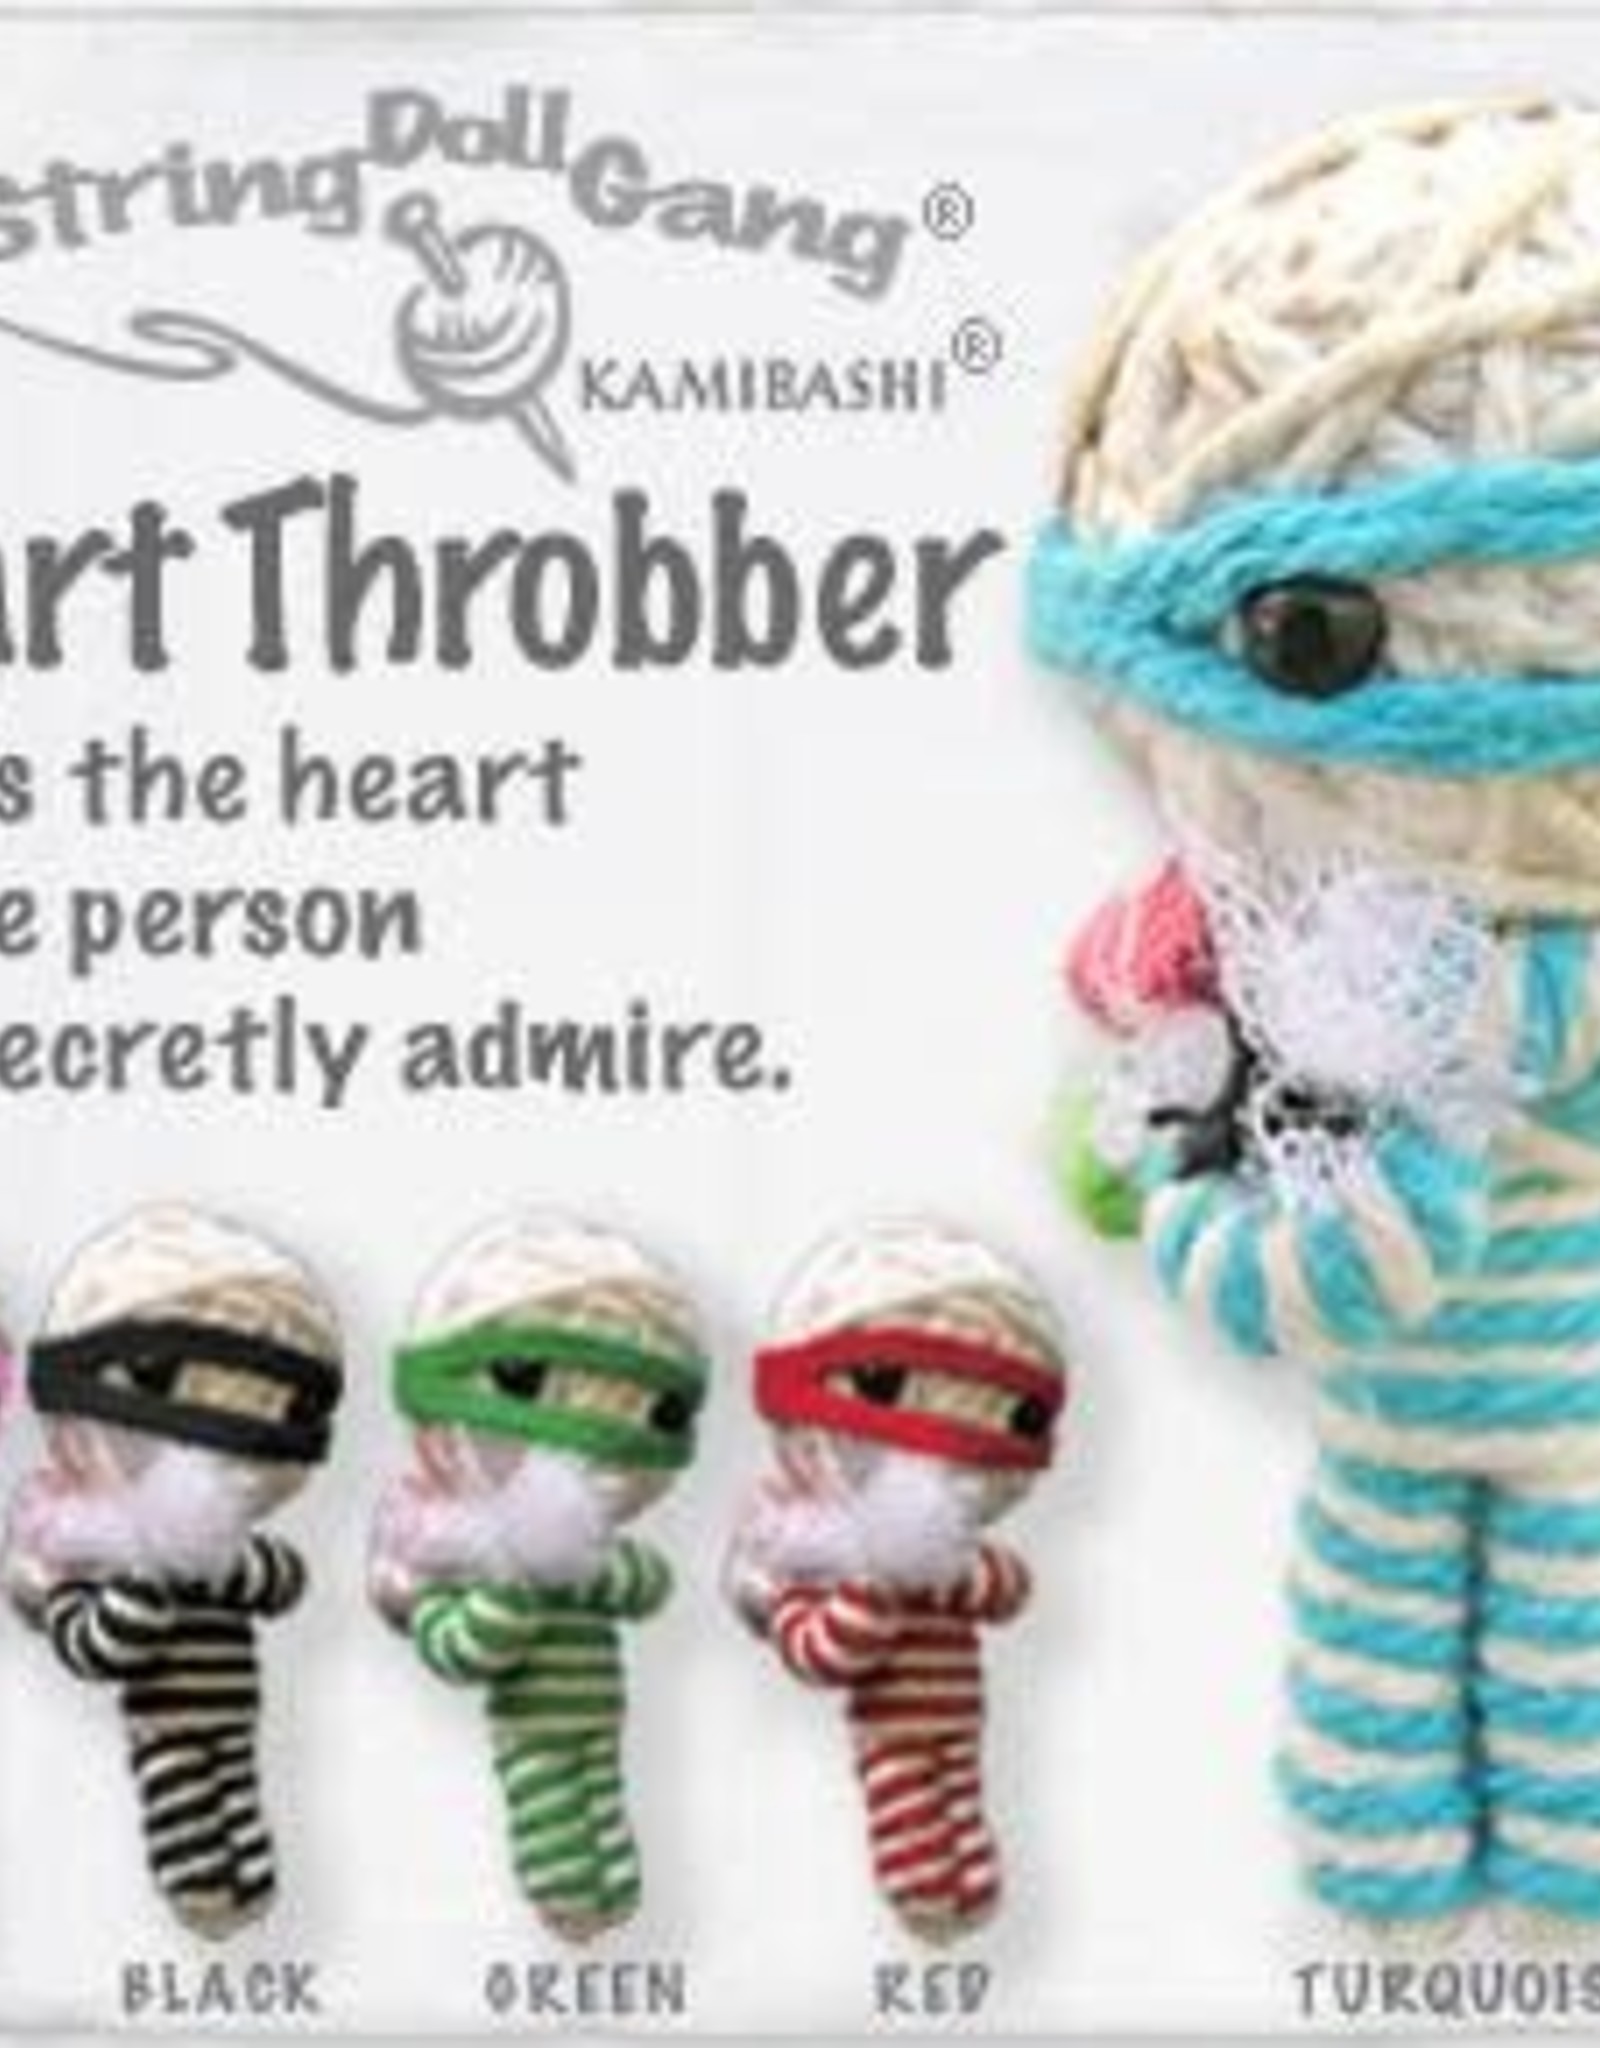 Kamibashi Heart Throbber